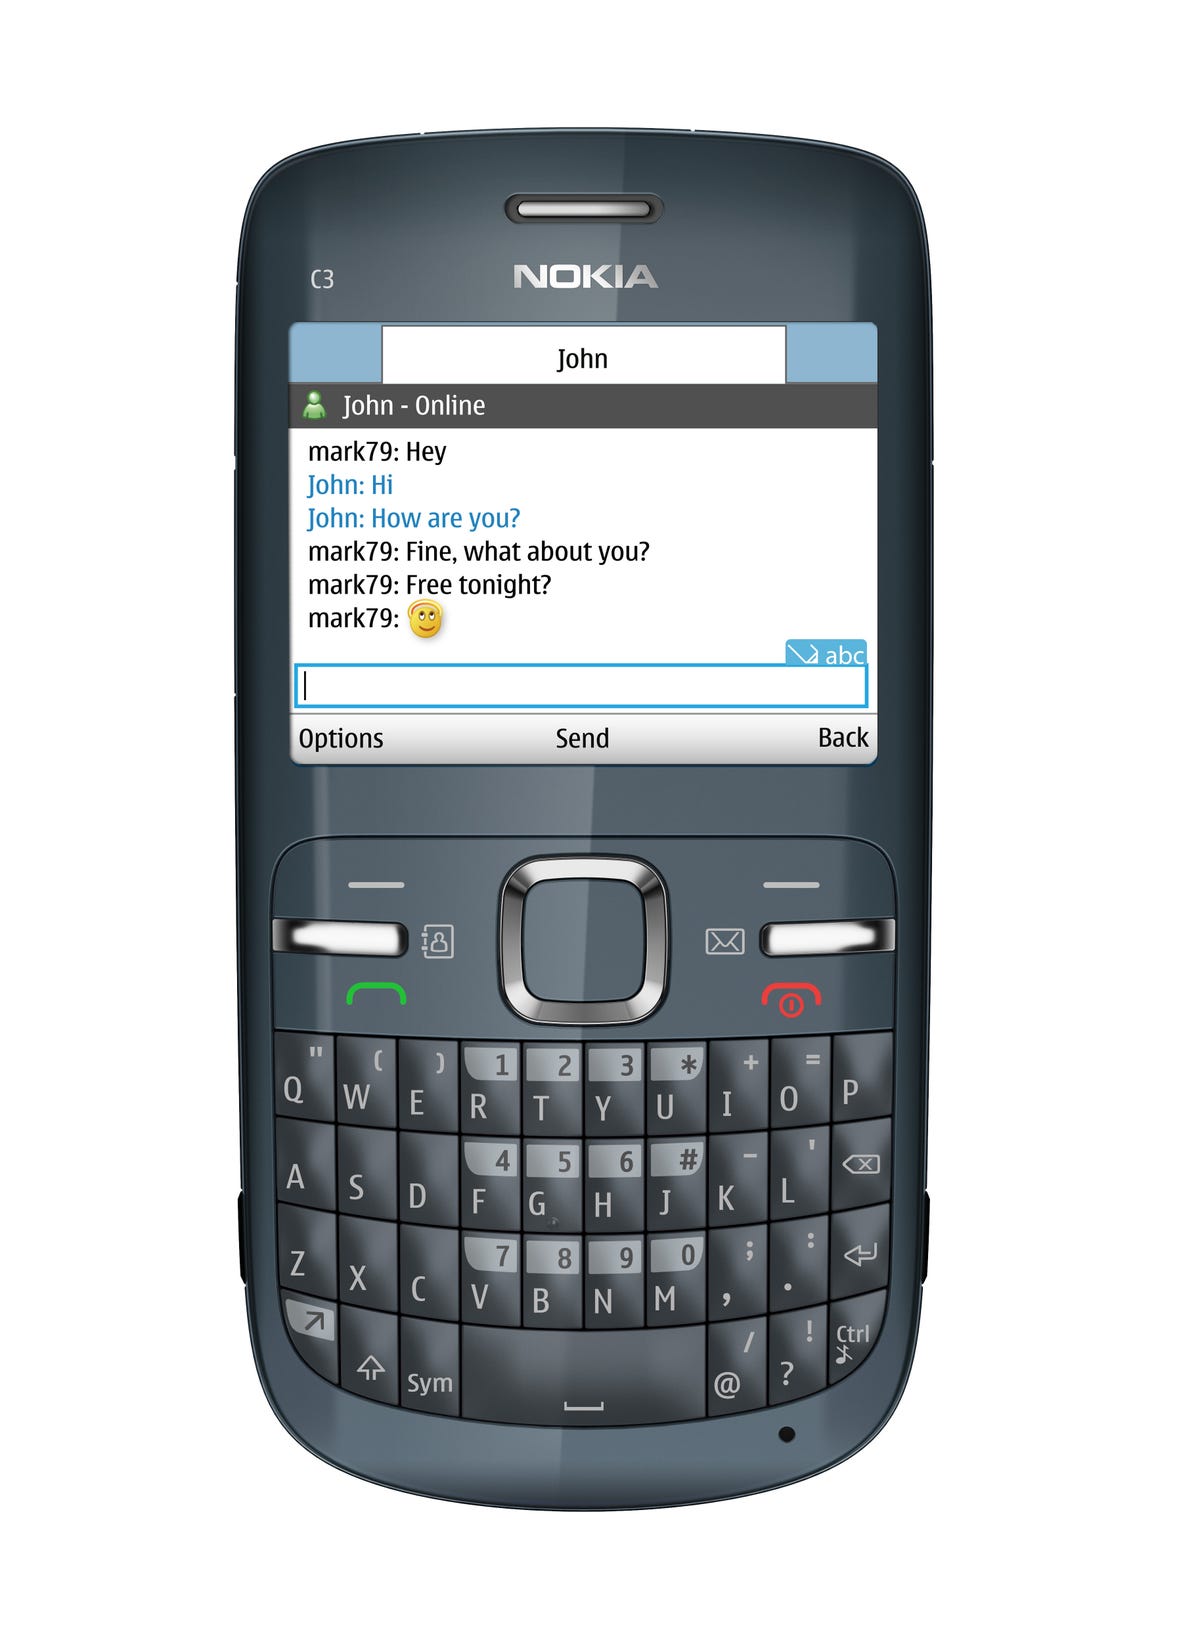 Nokia_C3_03.jpg